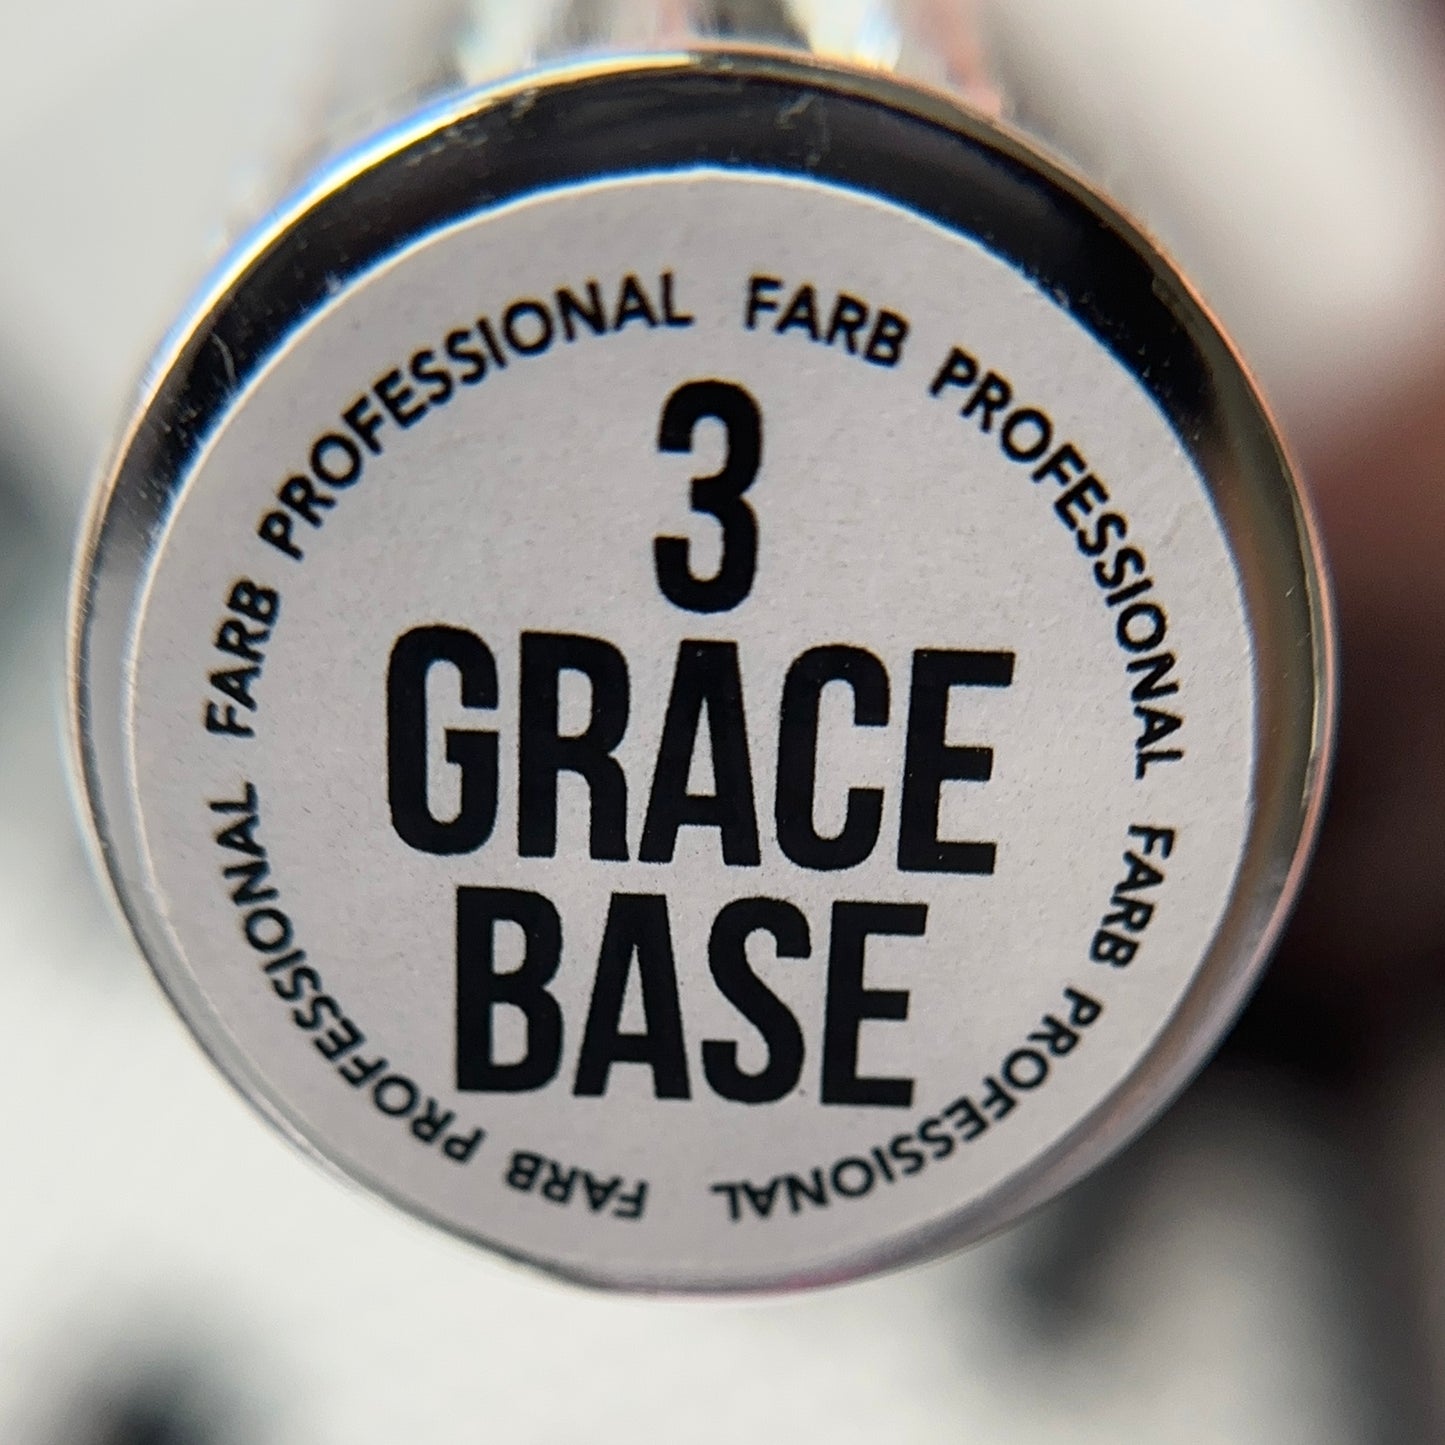 FARB Professional ART BASE GRACE #3, 15ml